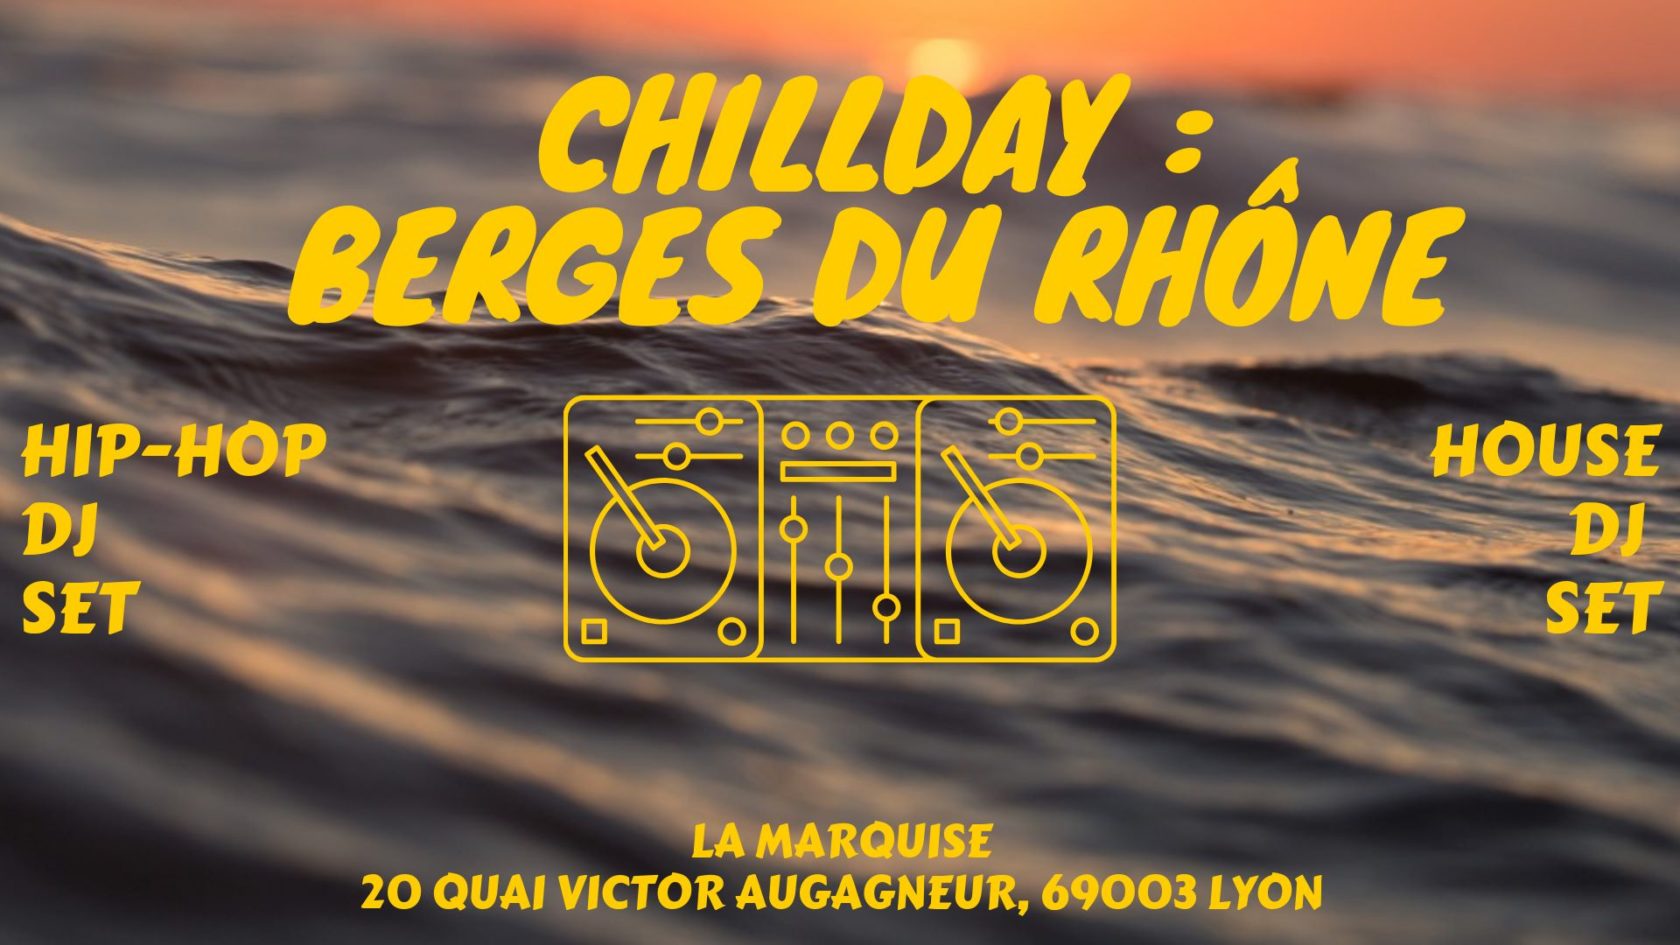 Chillday : Berges du Rhône